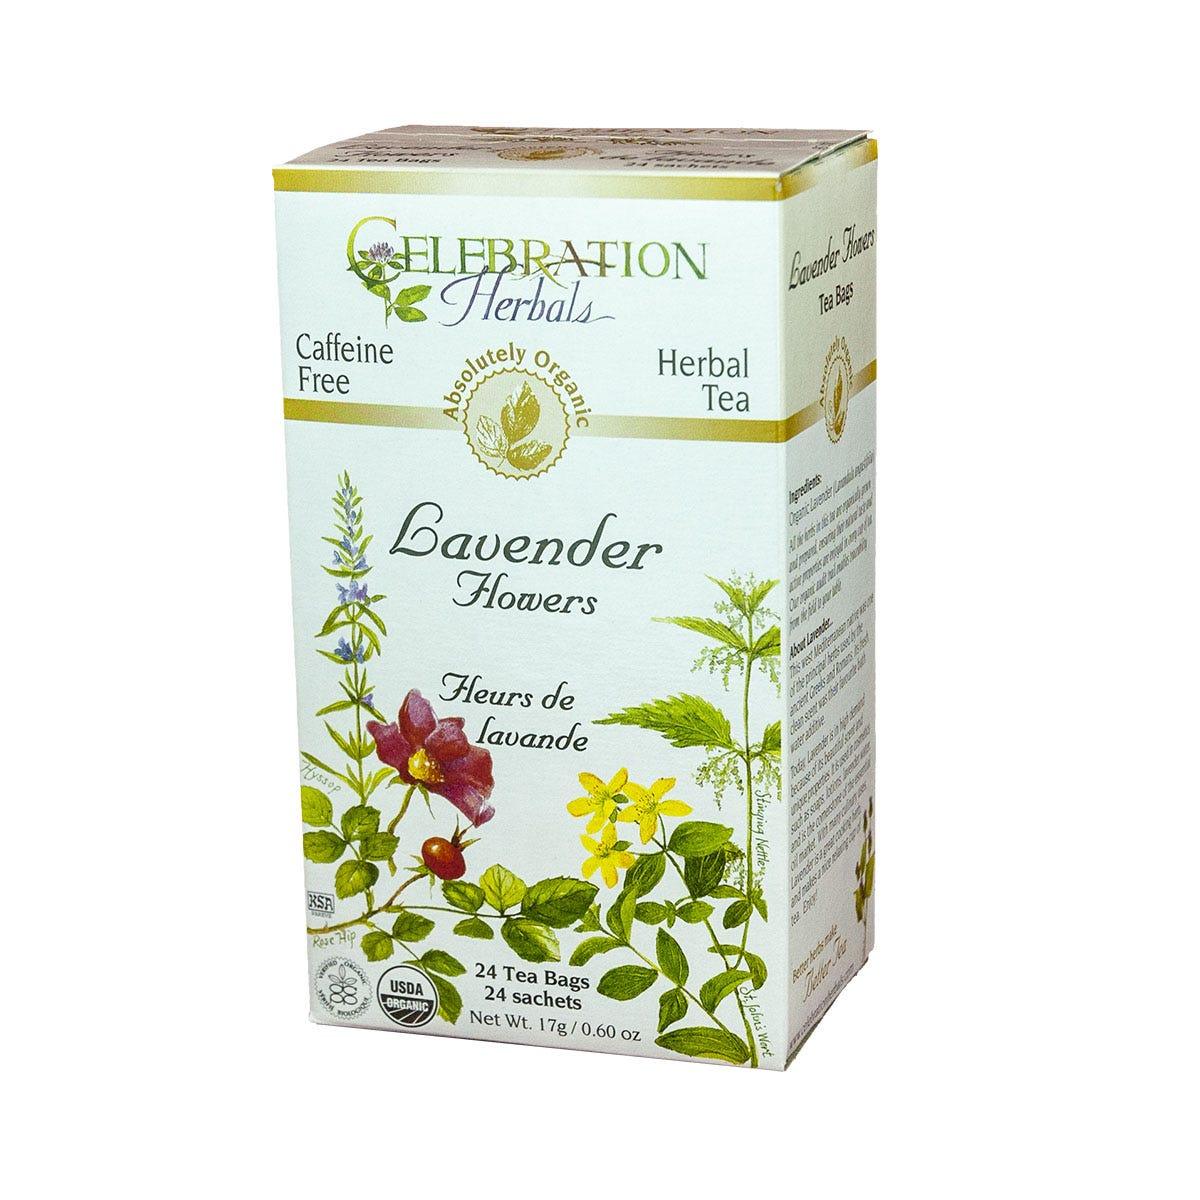 Celebration Org Lavender Flowers Tea 24 bags